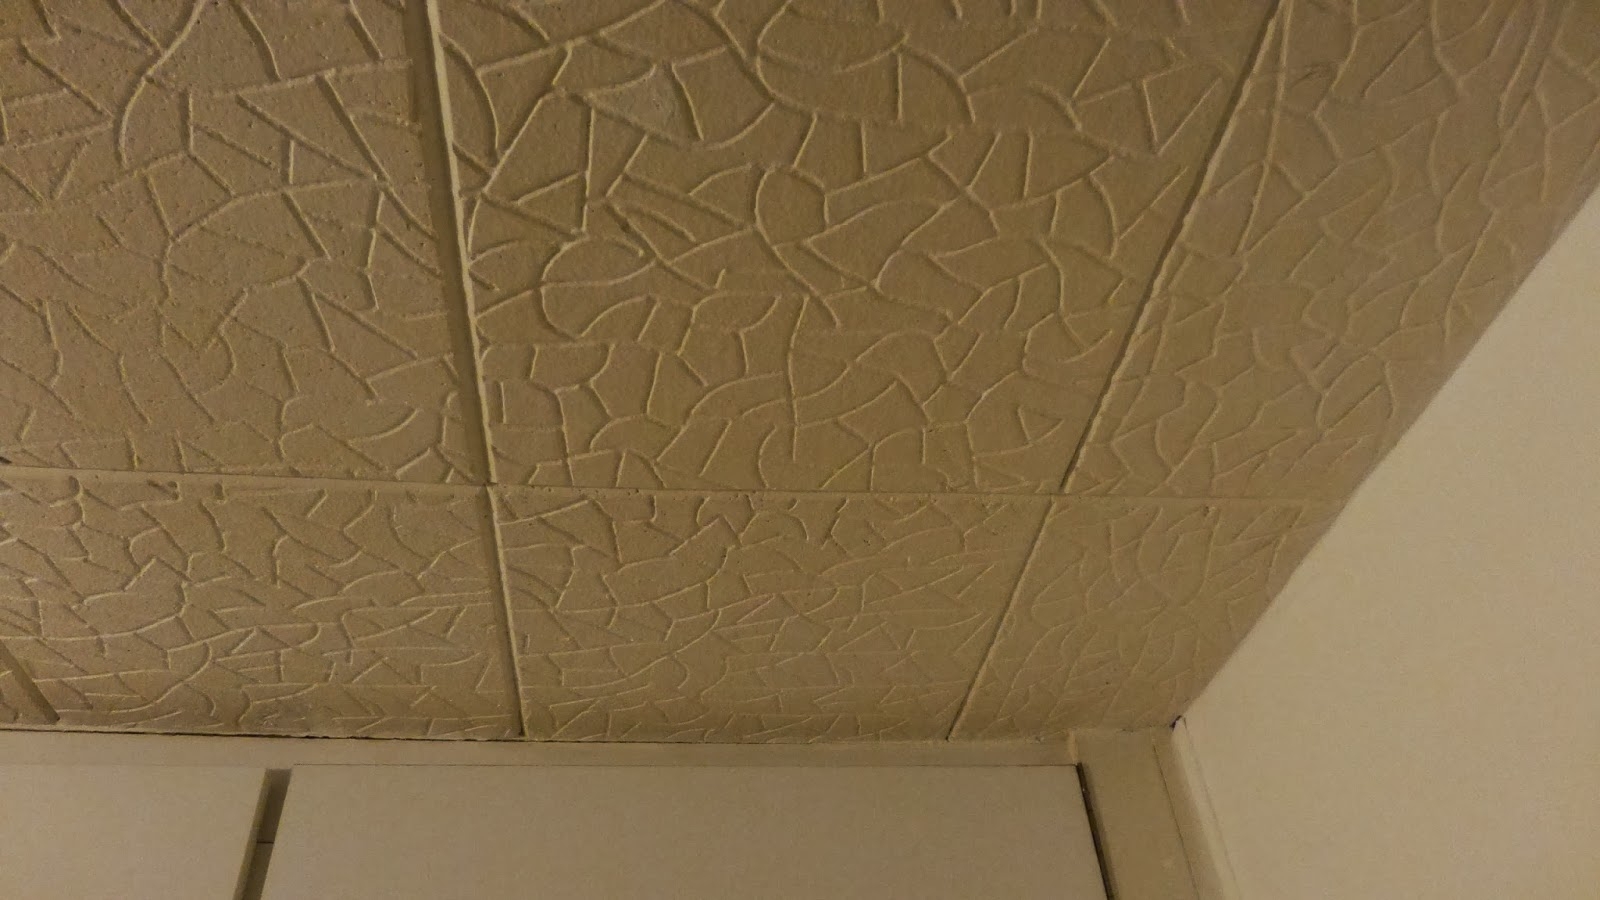 Polystyrene Ceiling Tiles Wickespolystyrene ceiling tiles wickes ceiling tiles